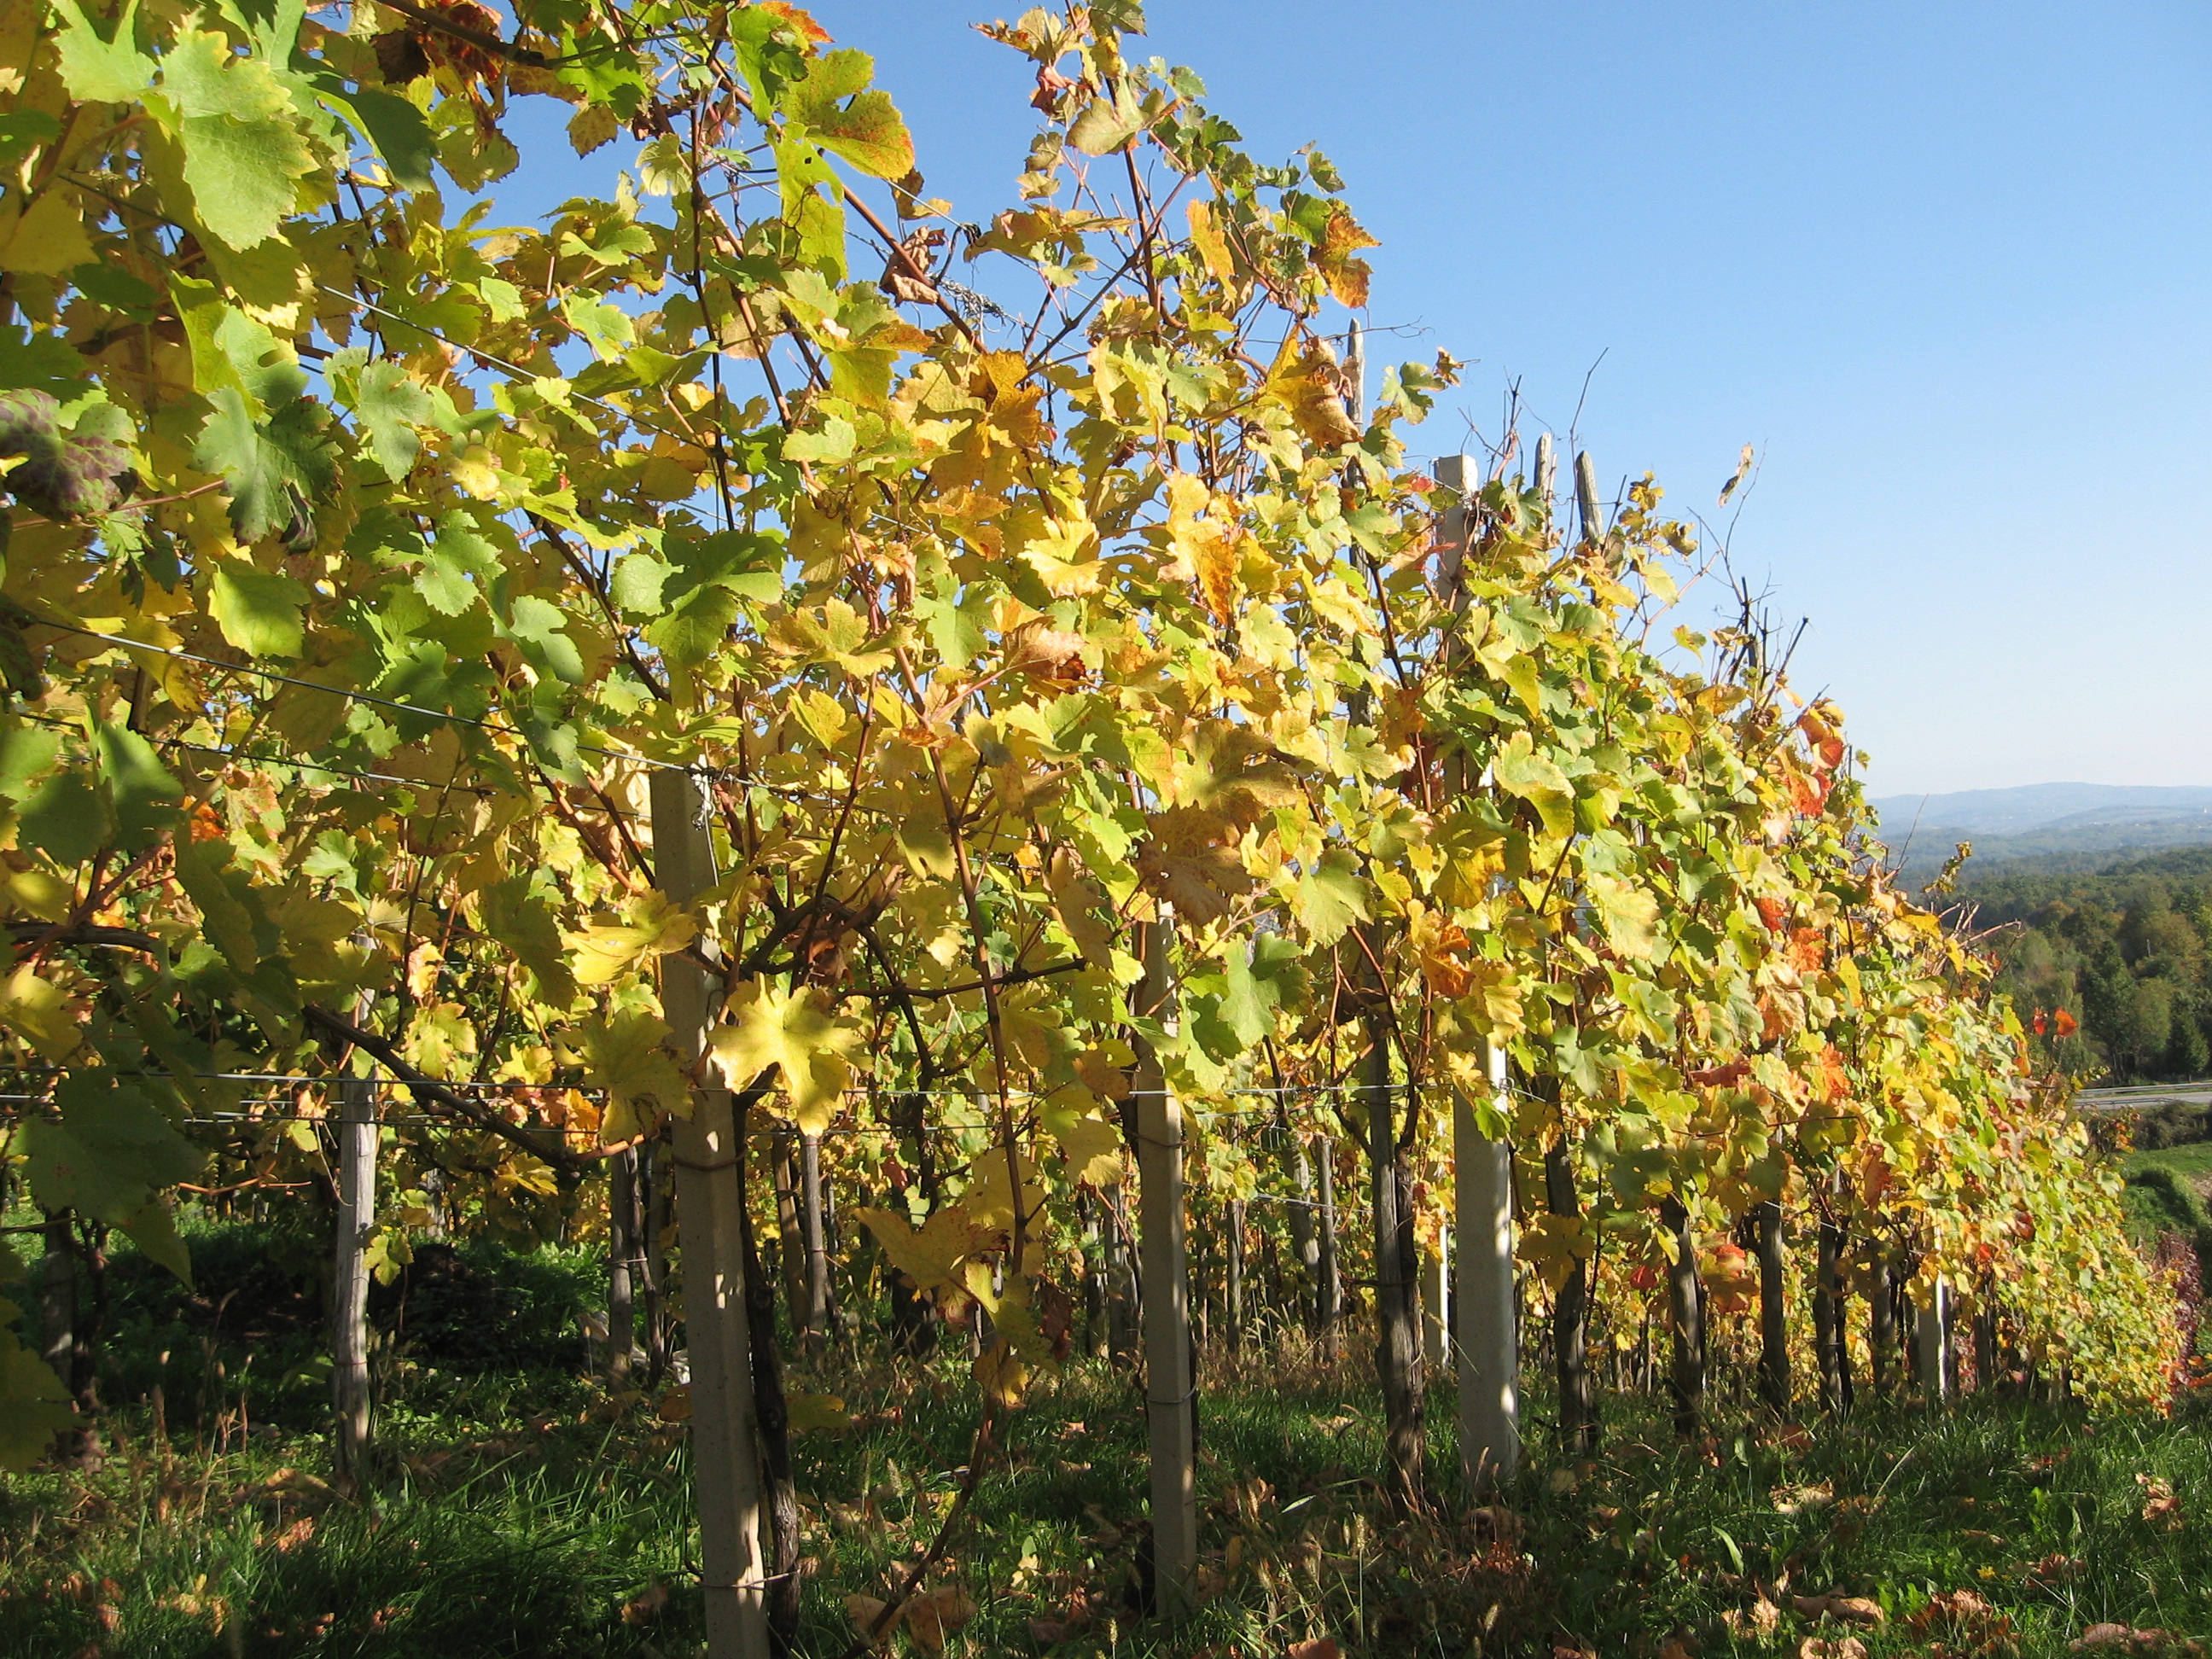 File:Wineyard autumn.jpg - Wikimedia Commons